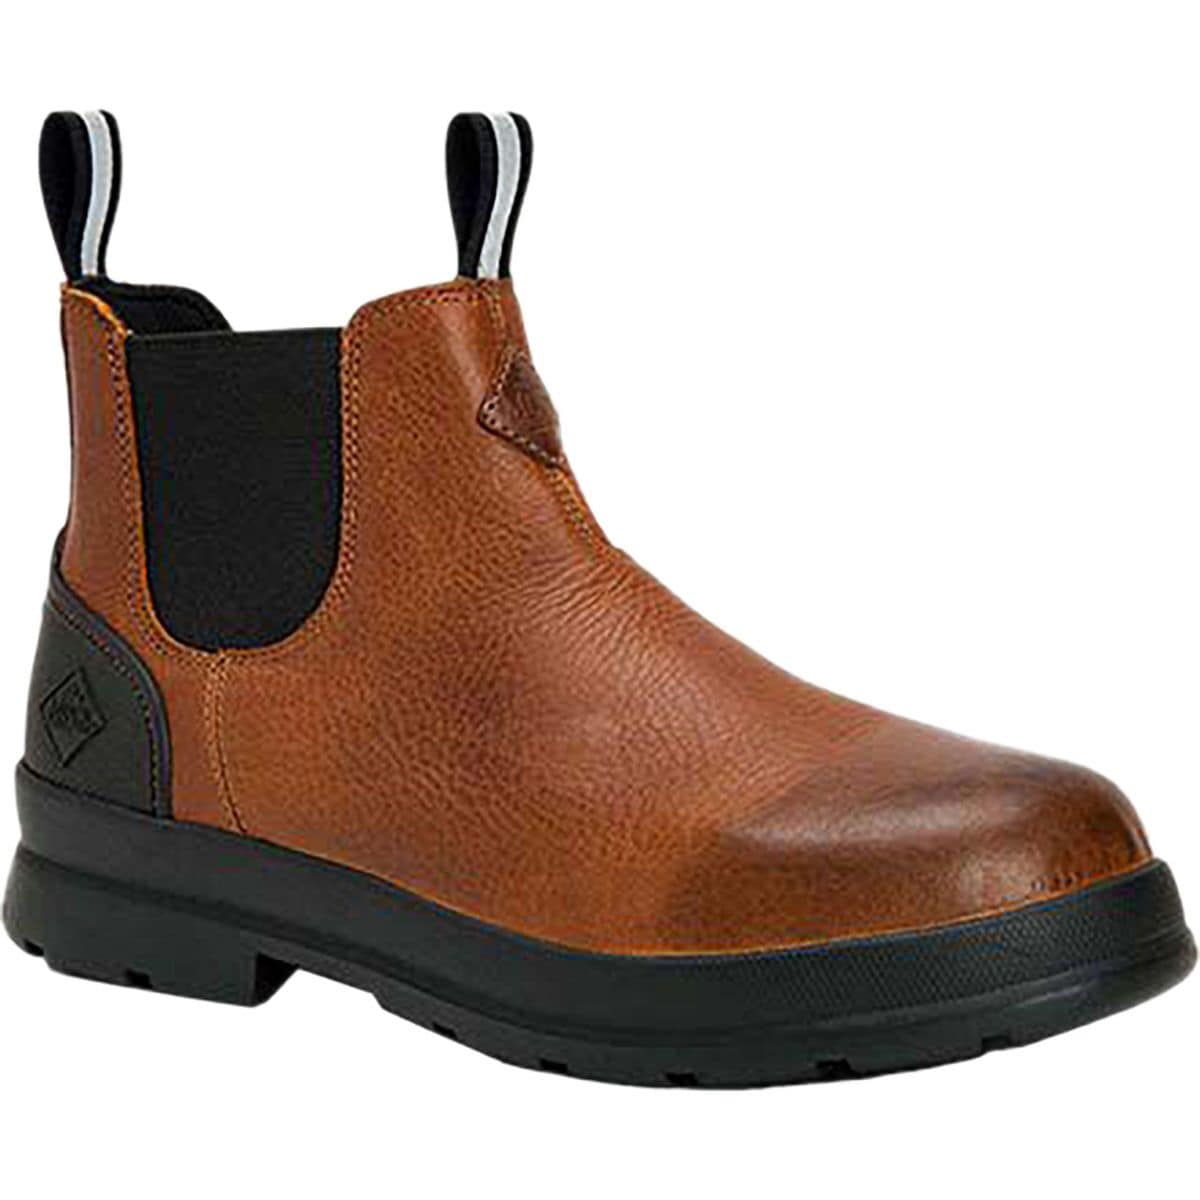 Muck Boots Chore Farm Leather Chelsea PT Wide Boot - Men's